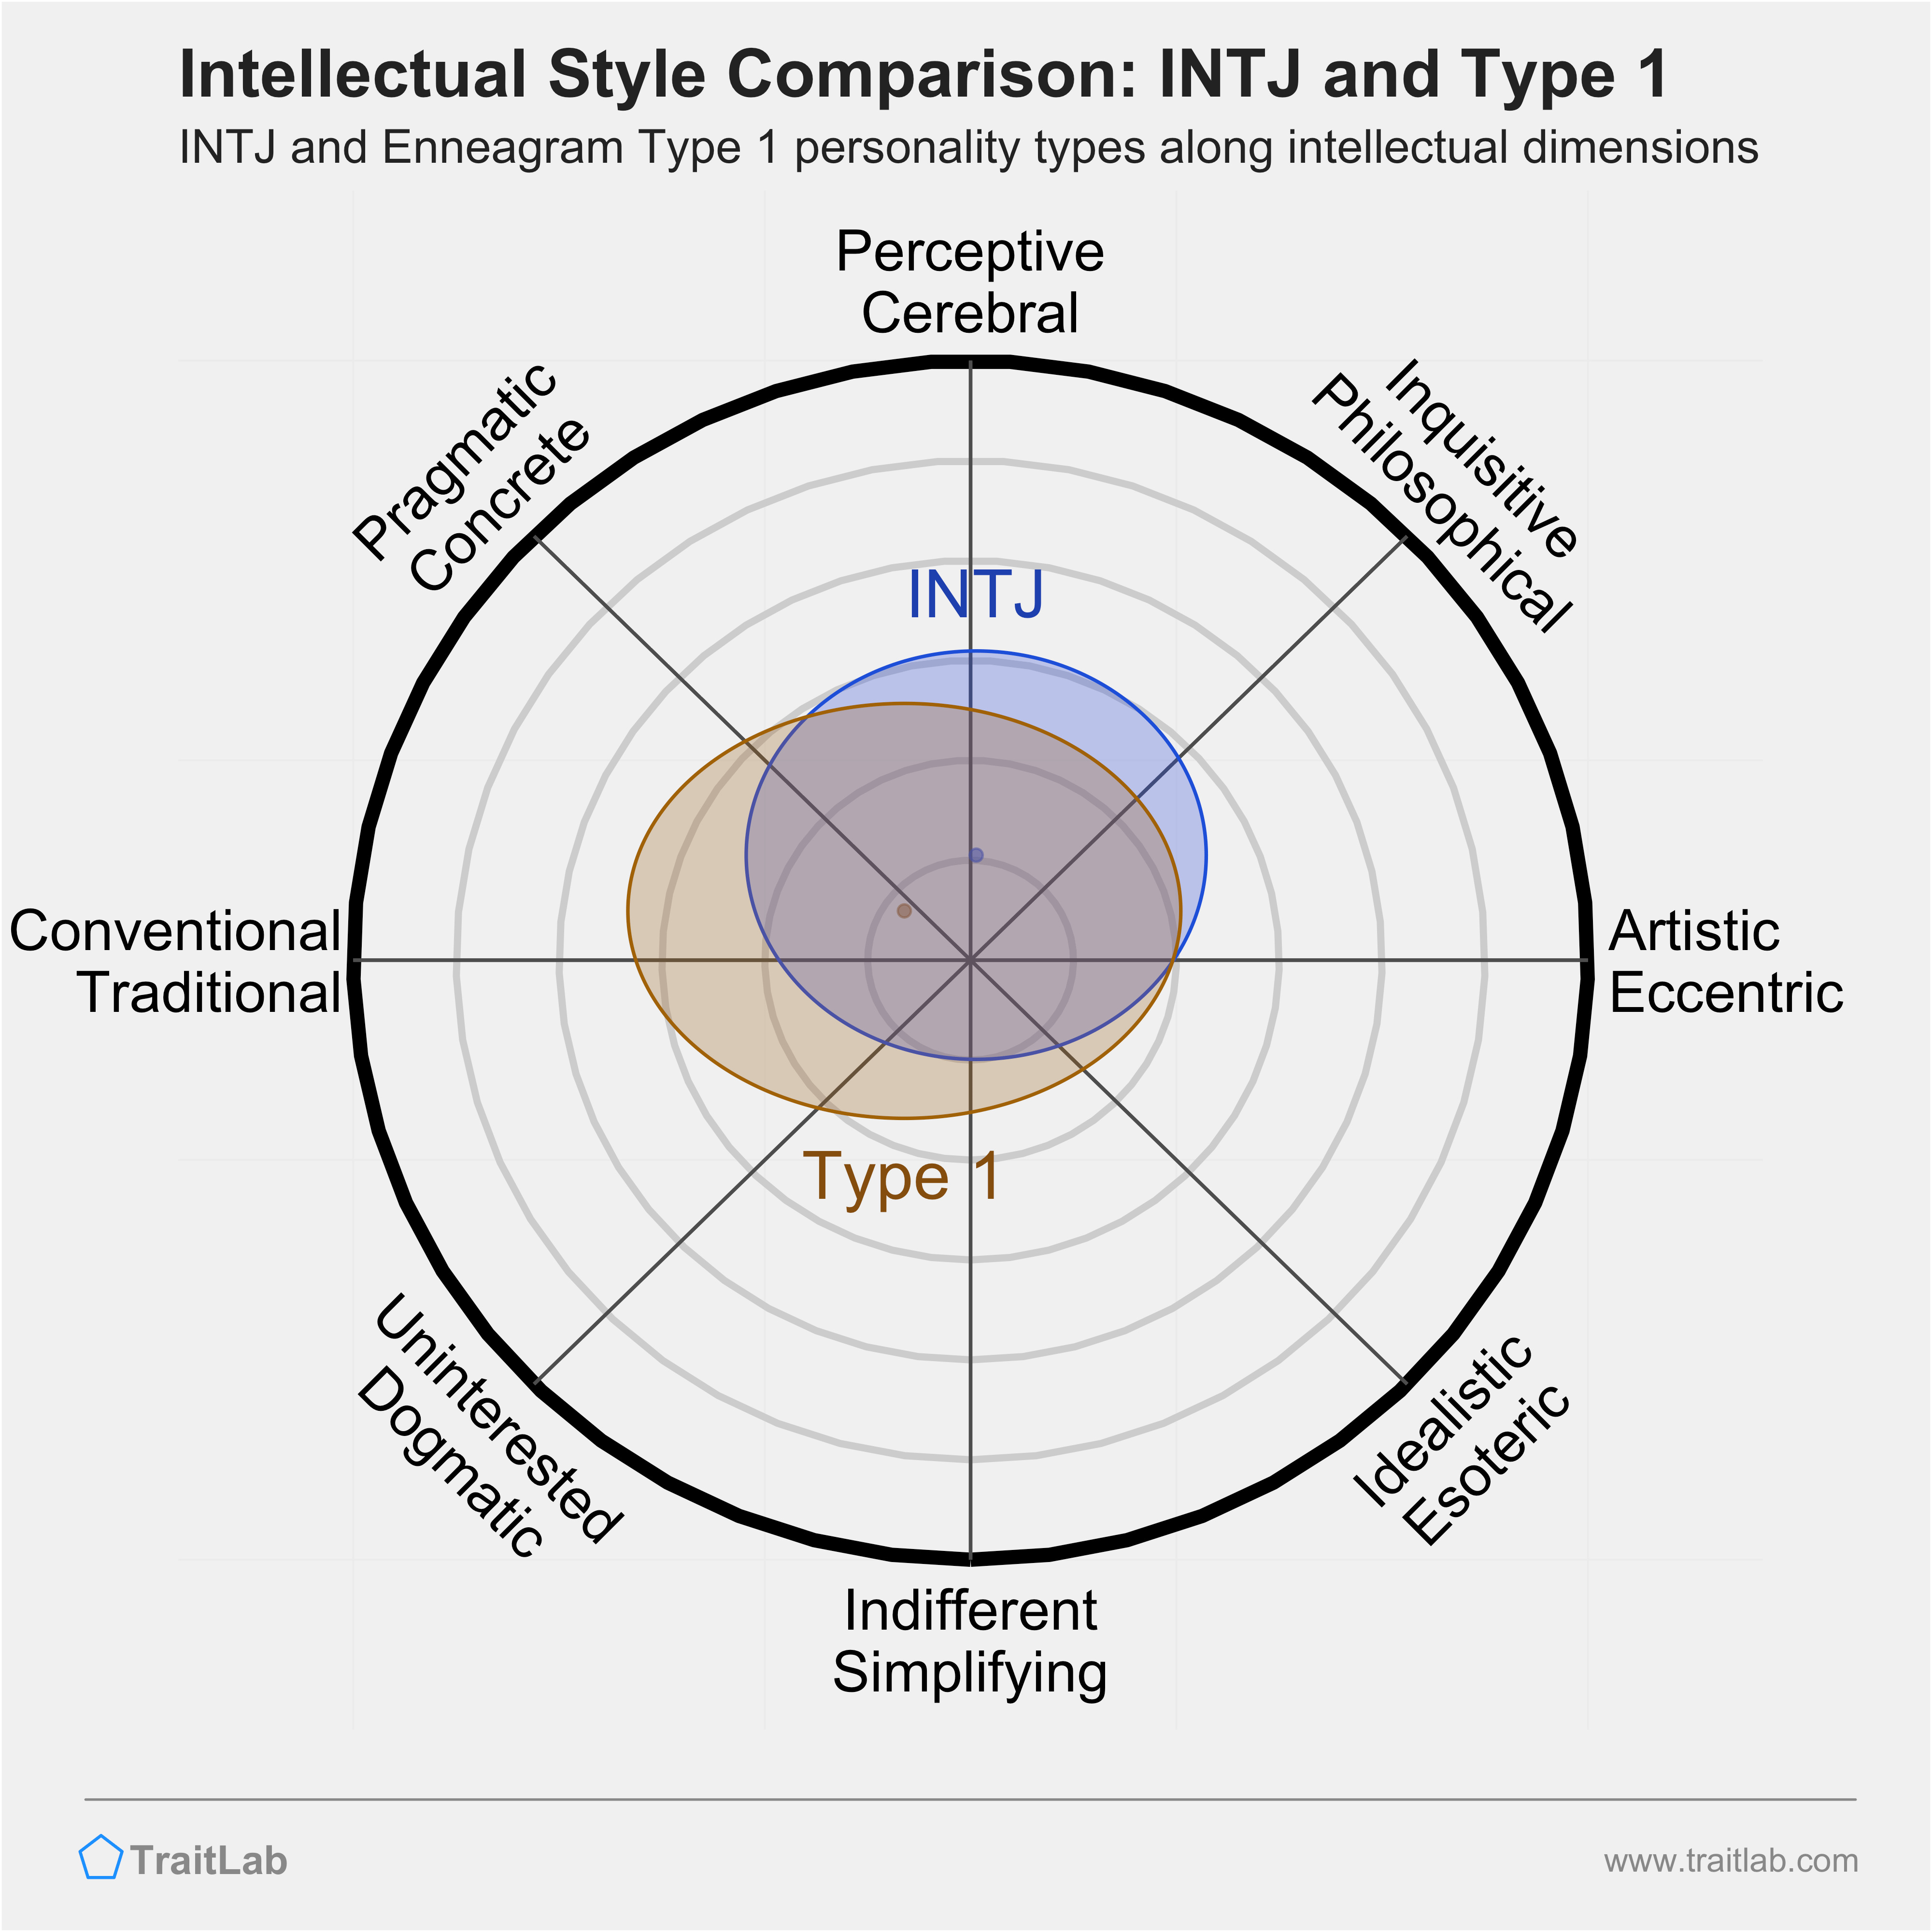 INTJ and Type 1 comparison across intellectual dimensions